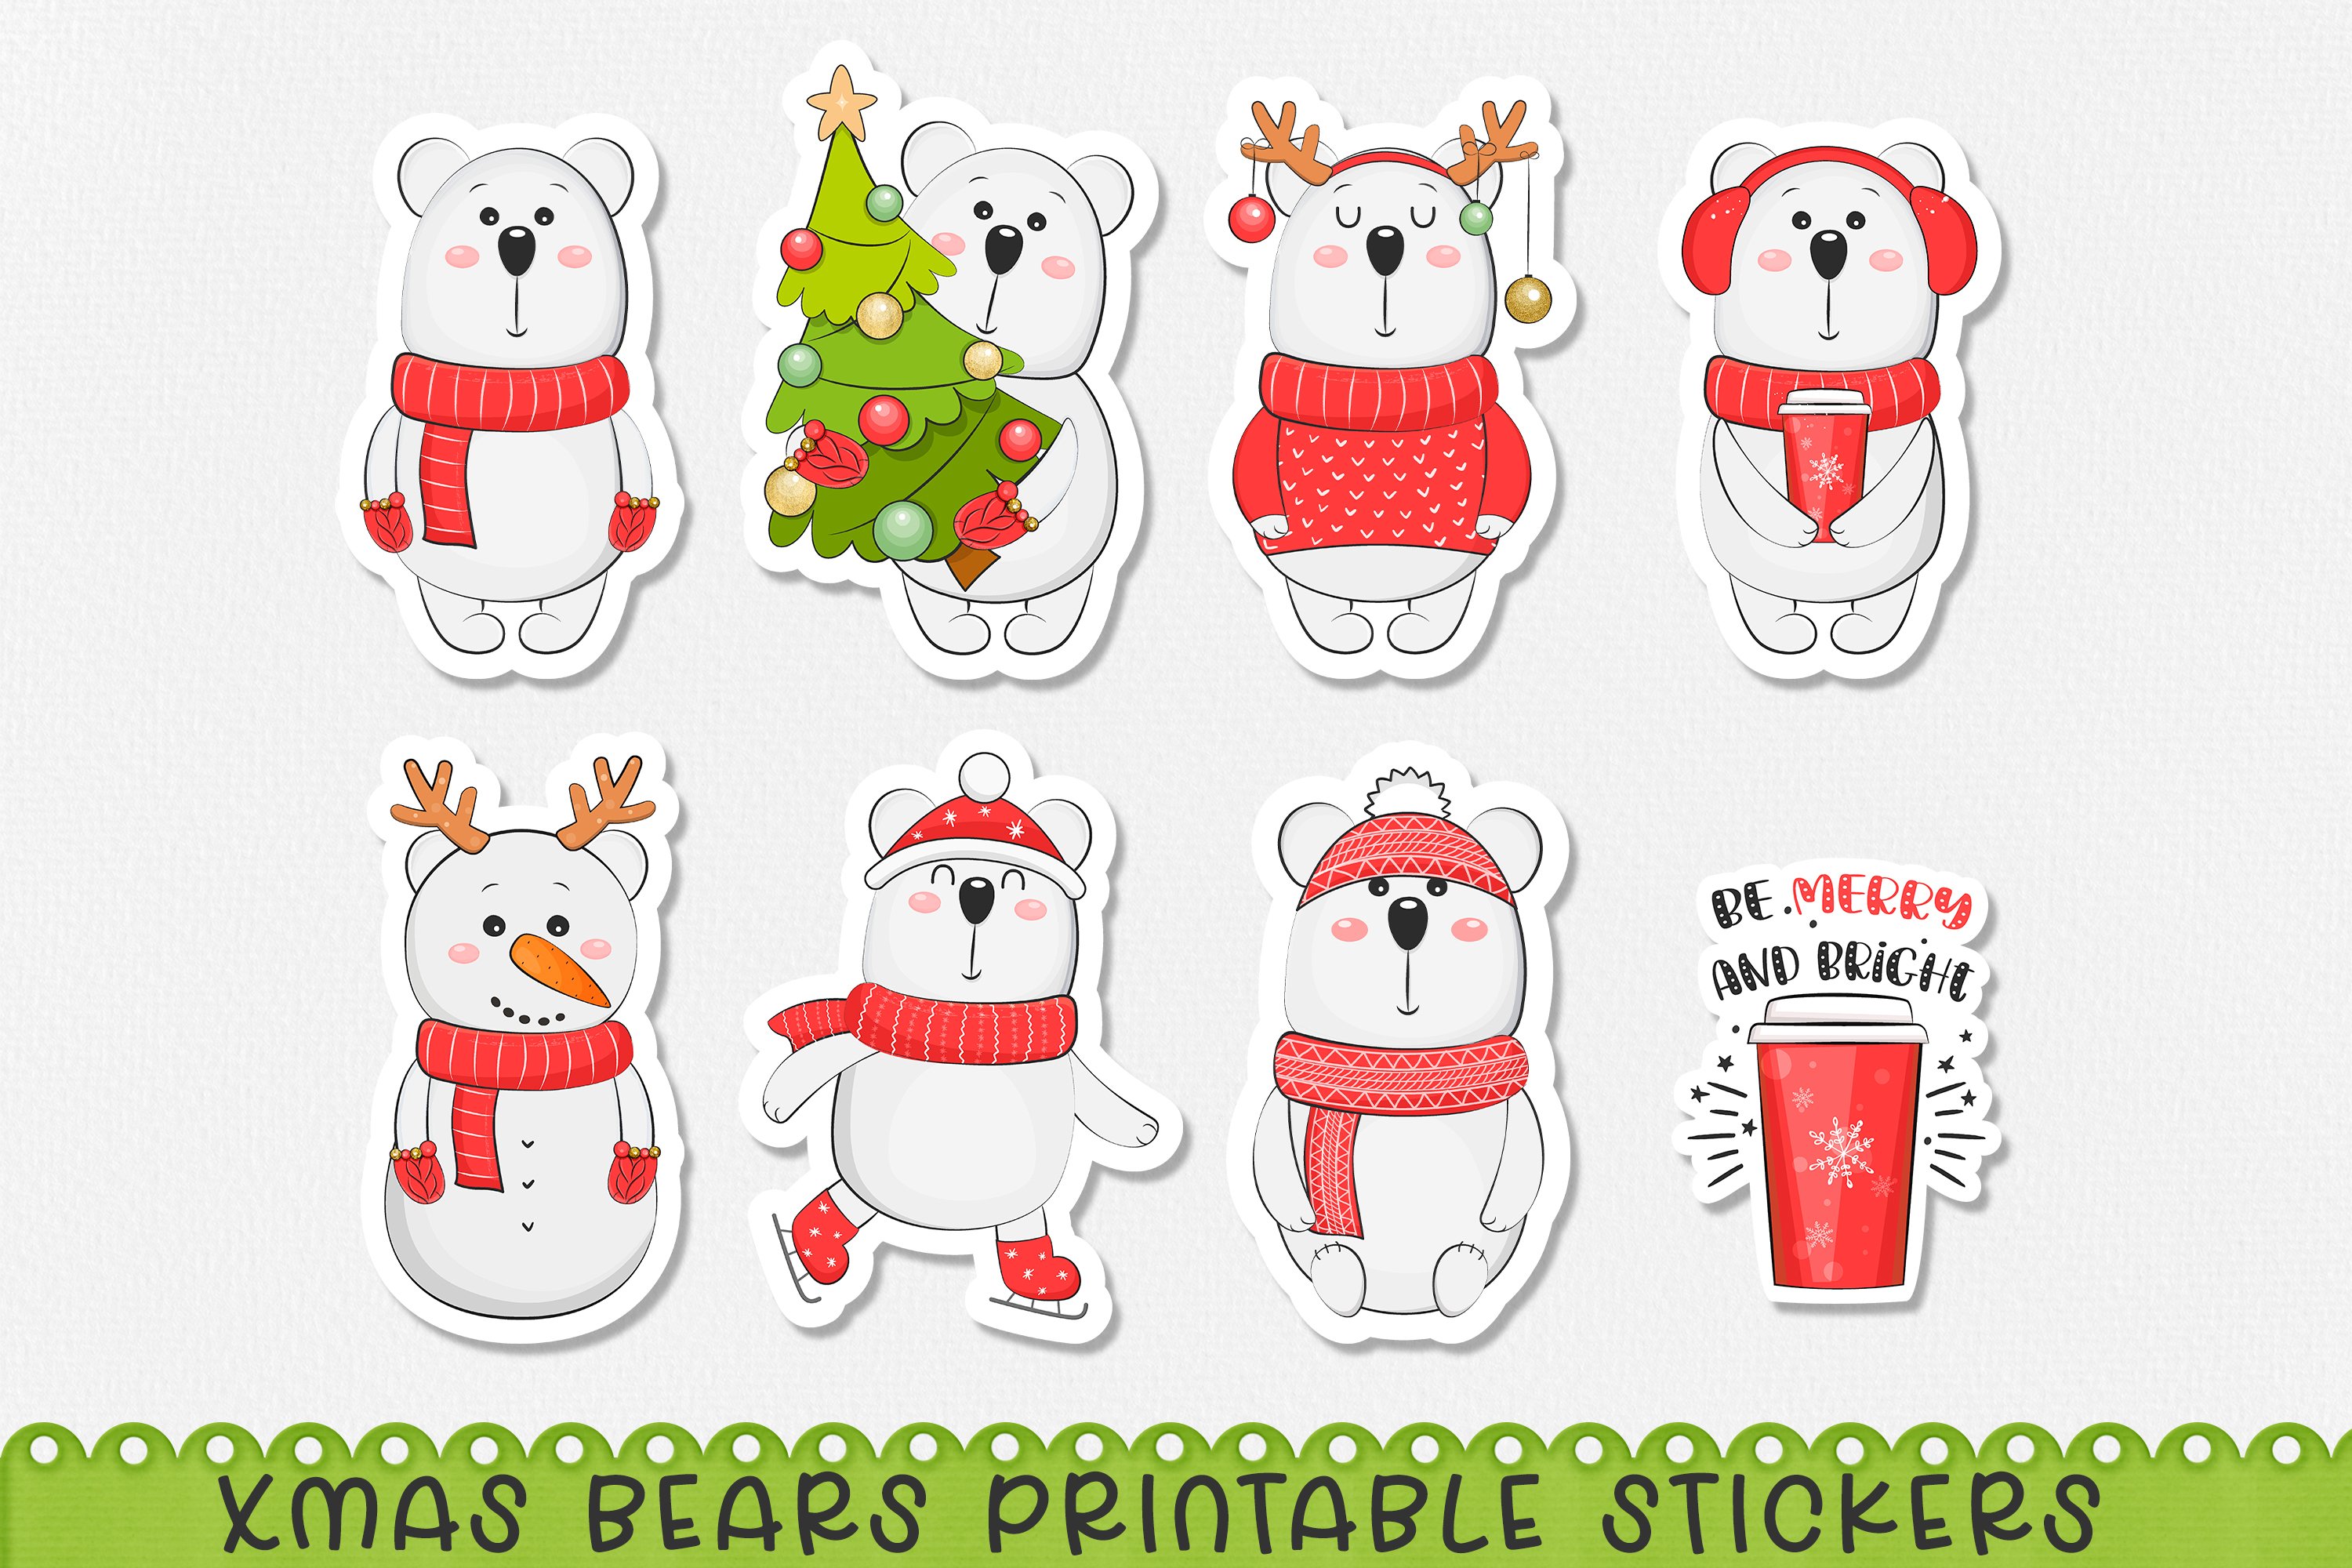 Christmas bears on stickers.